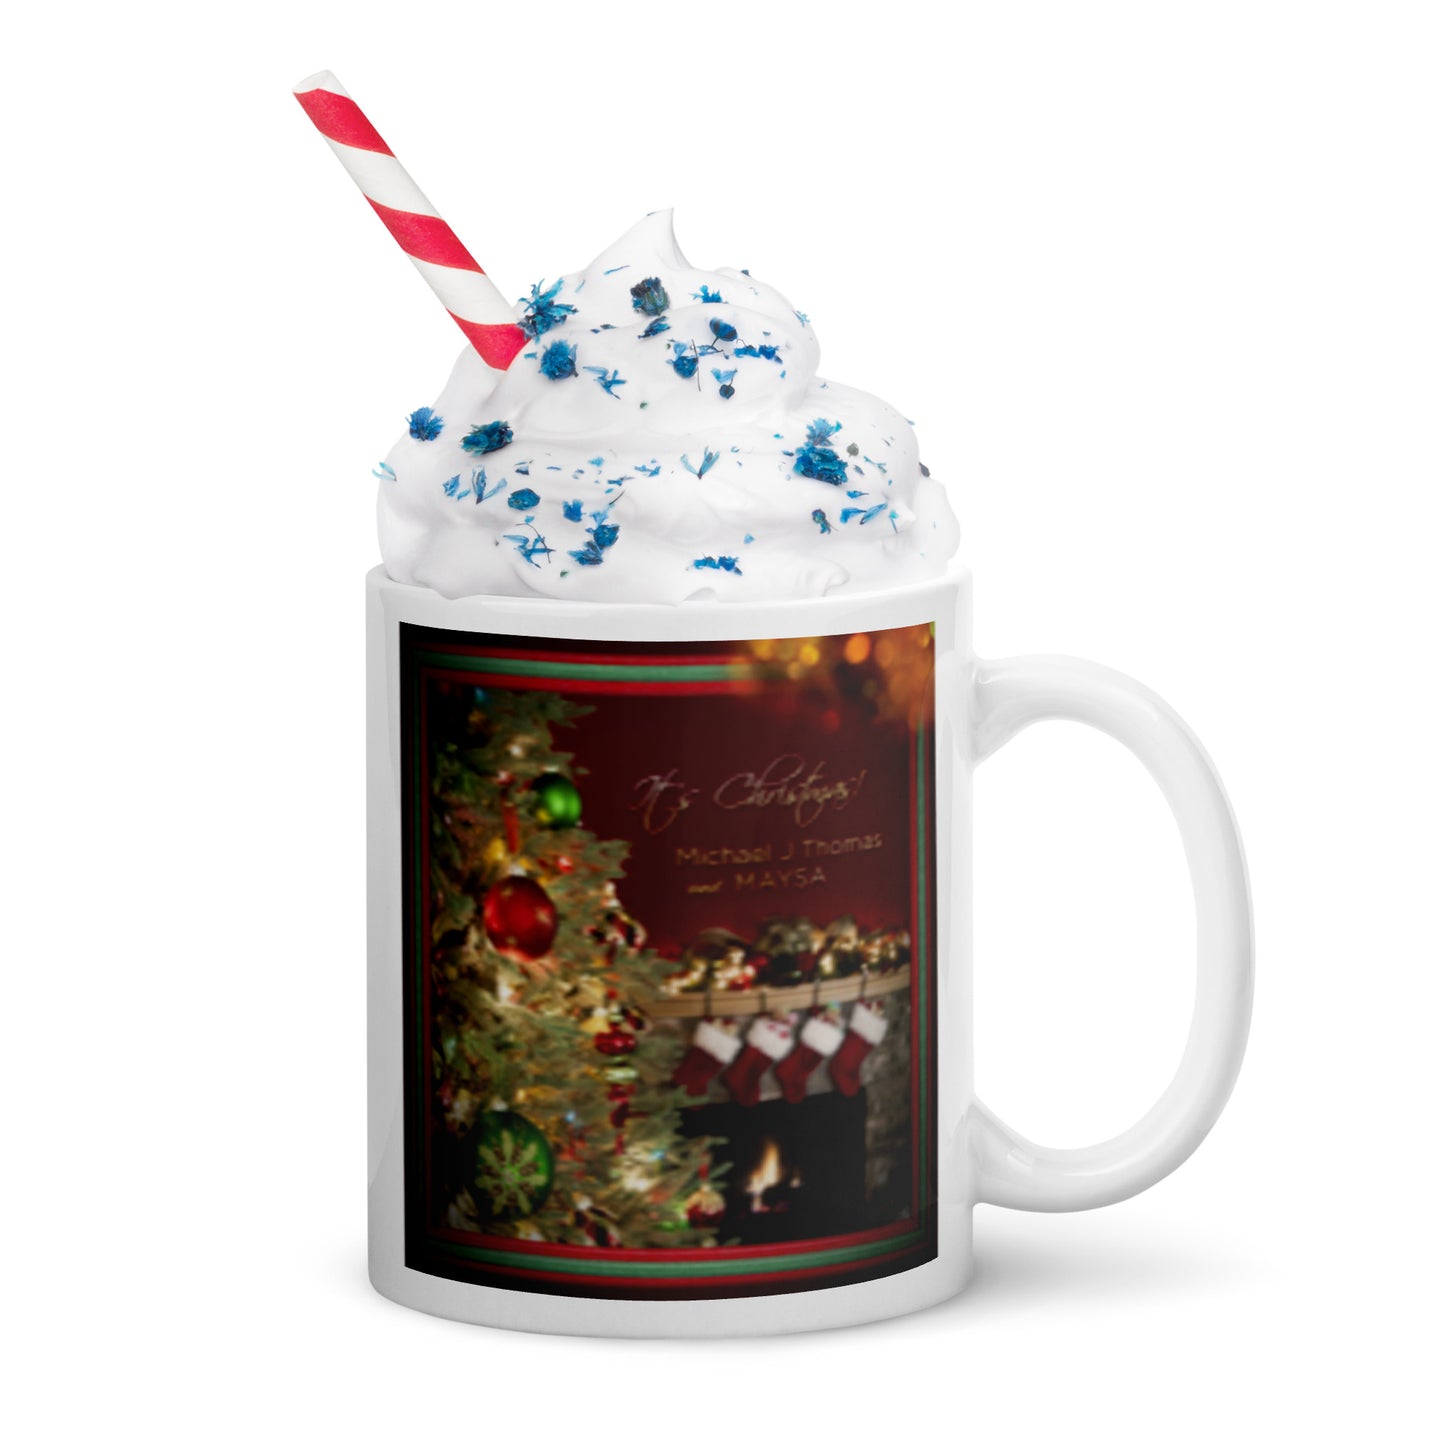 It's Christmas Coffee Mug (Includes It's Christmas mp3)